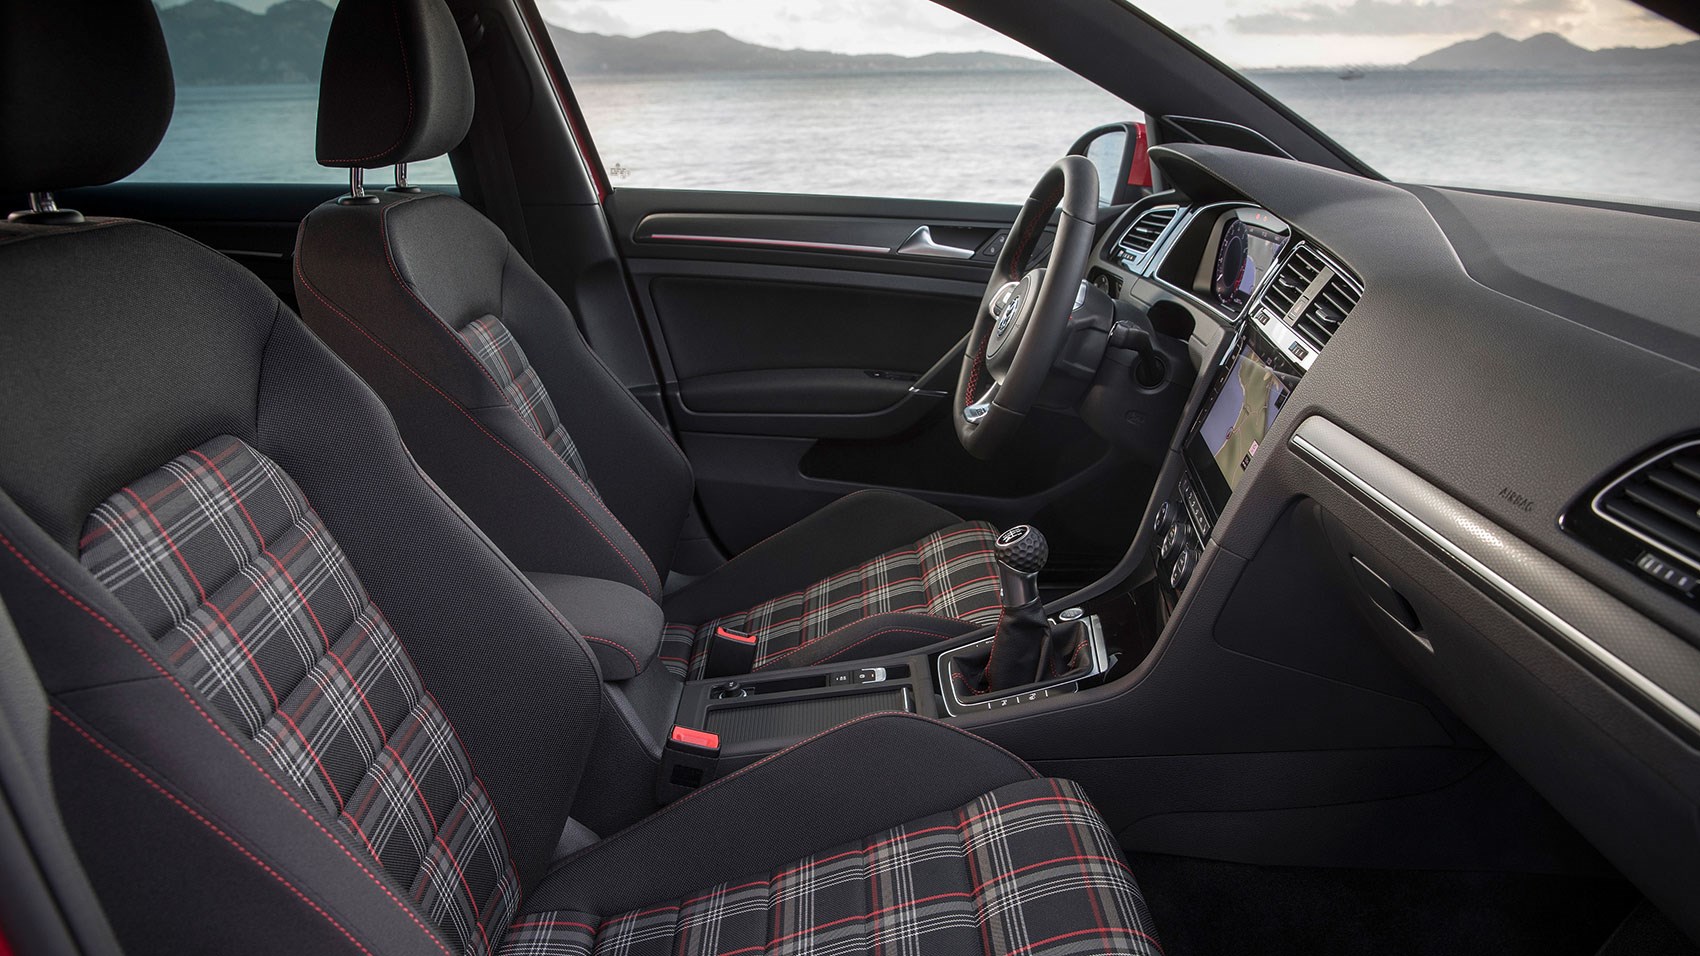 VW Golf GTI 2017 cabin with tartan seats